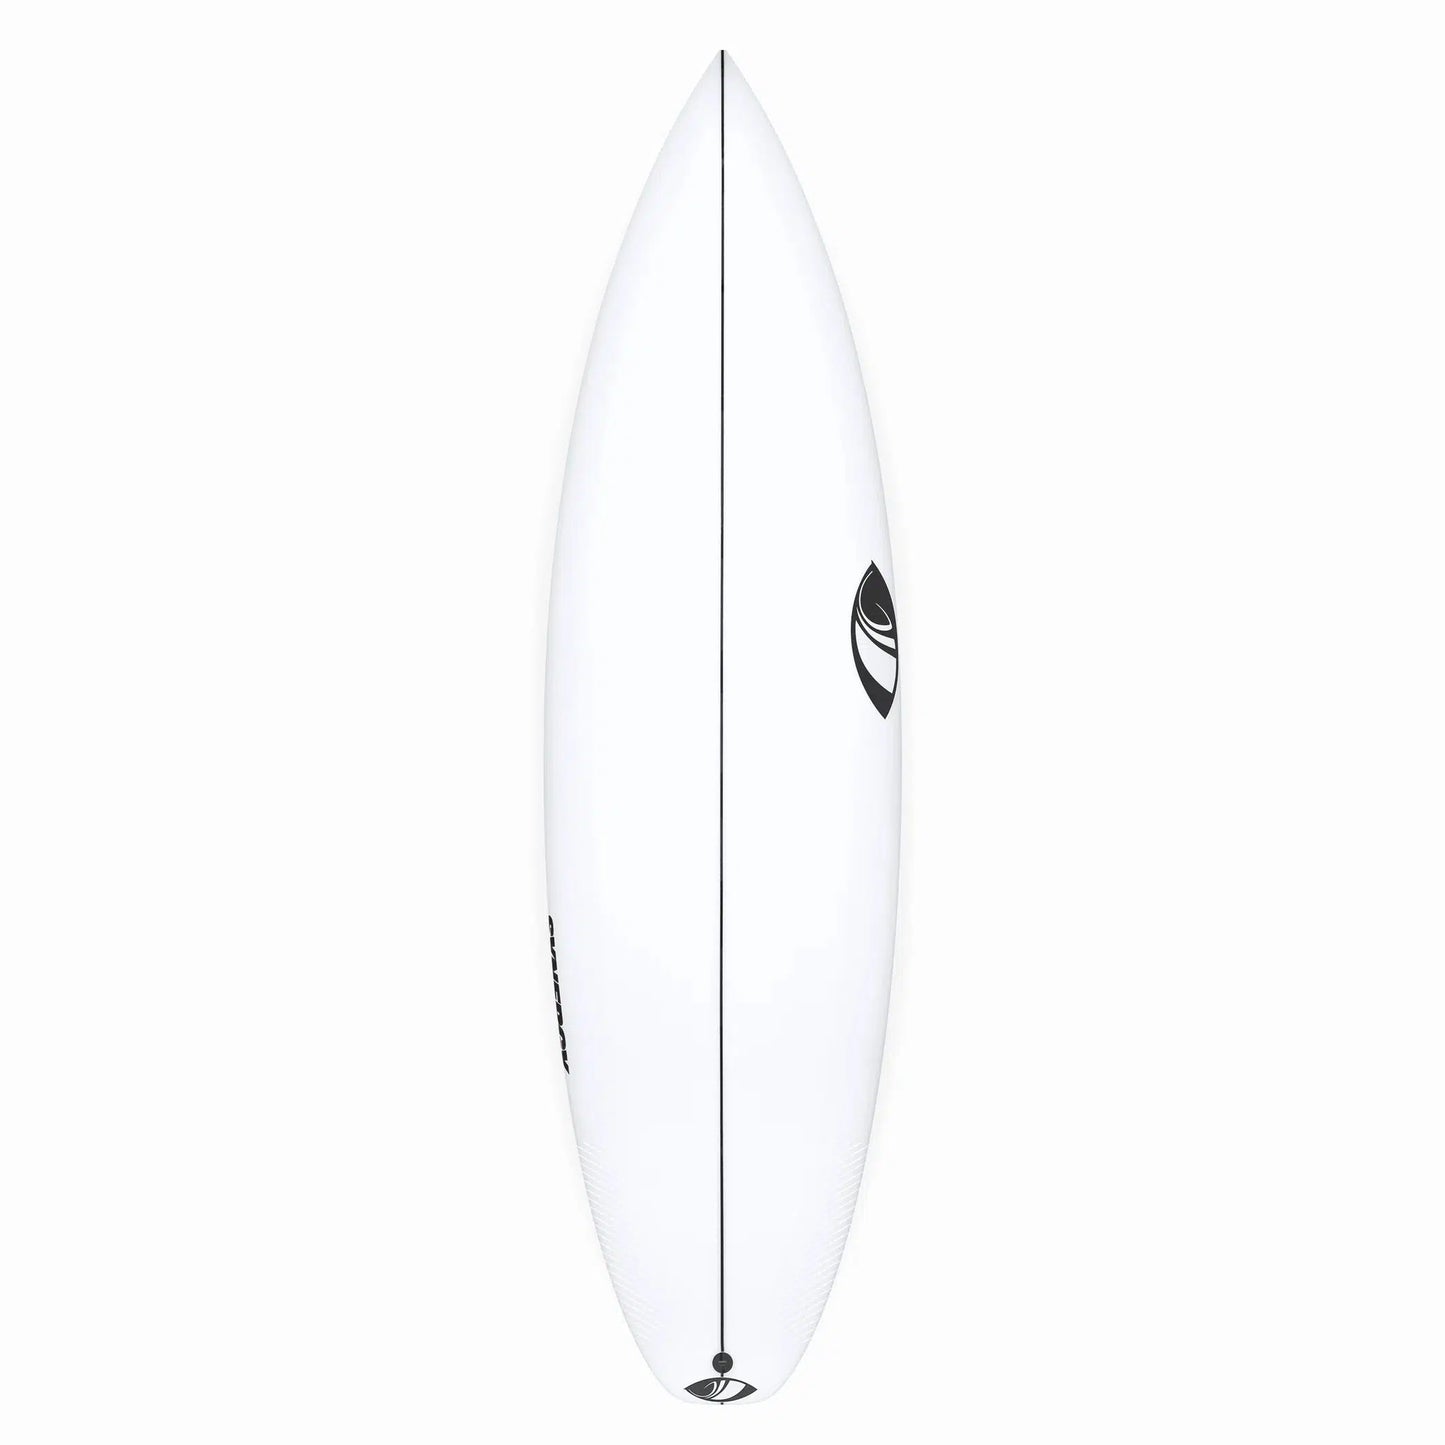 Sharpeye Synergy Surfboard - Round Tail